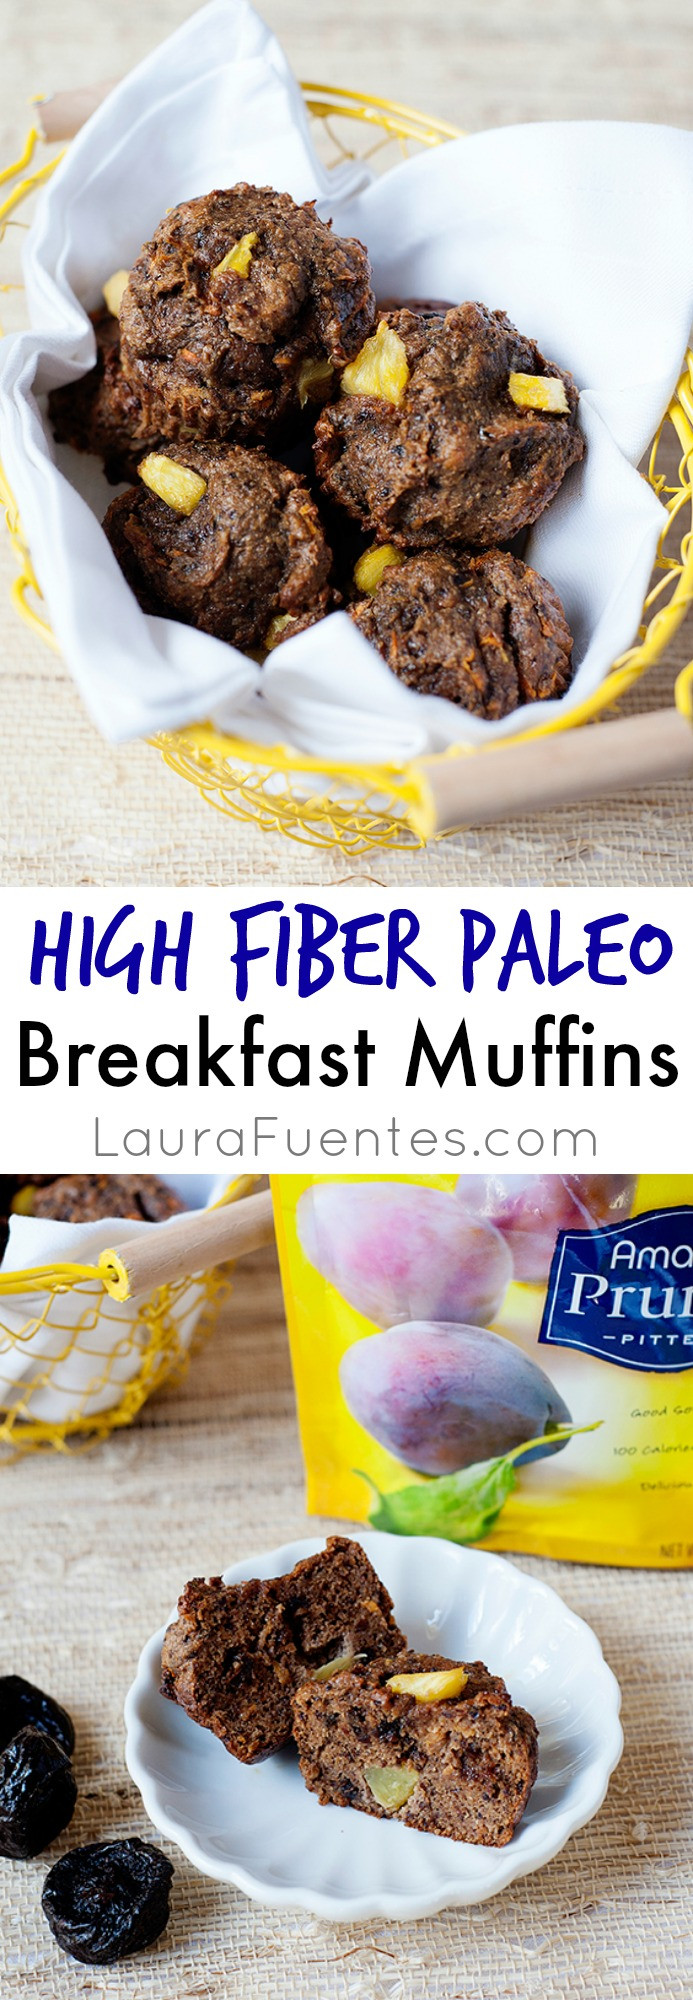 High Fiber Breakfast Recipe
 High Fiber Paleo Breakfast Muffins